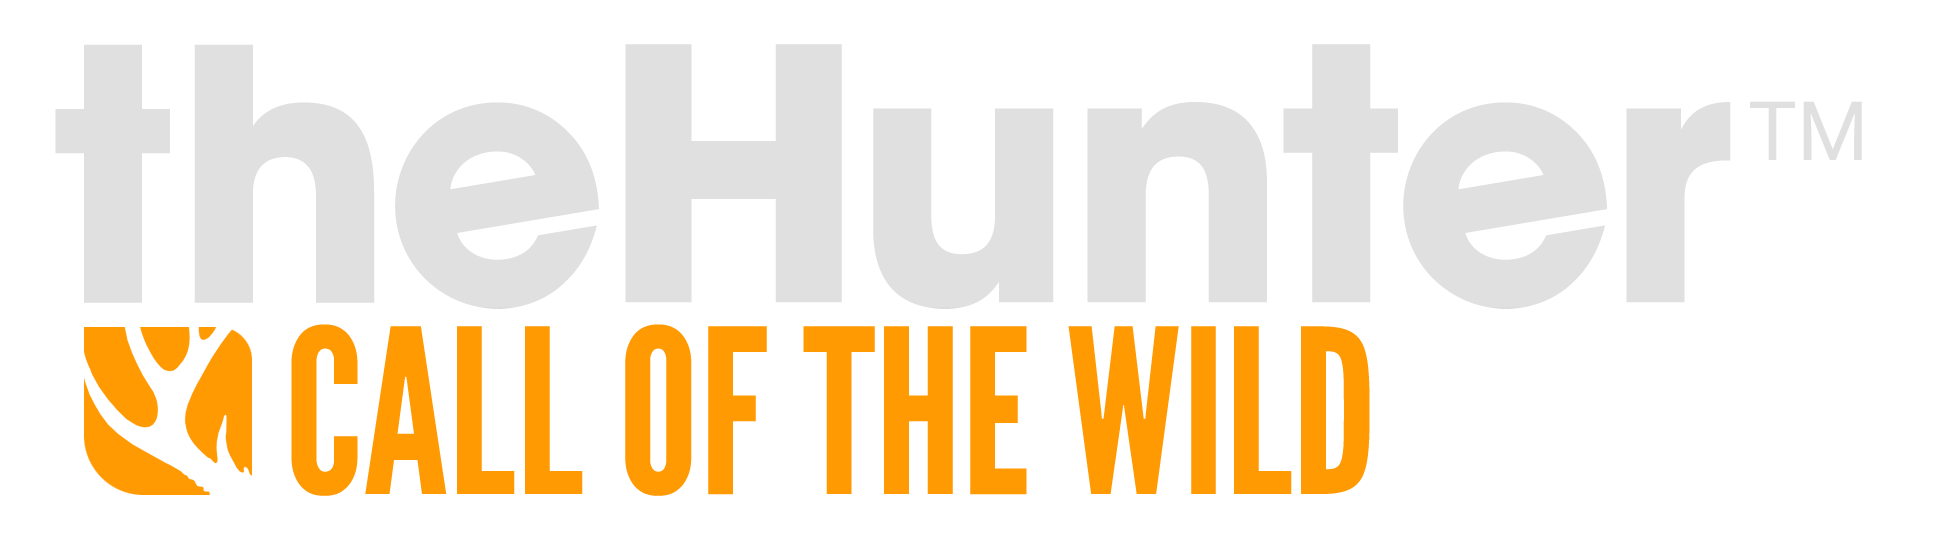 TheHunter Call of the Wild [v1.9.1 + 8 DLC] от CODEX